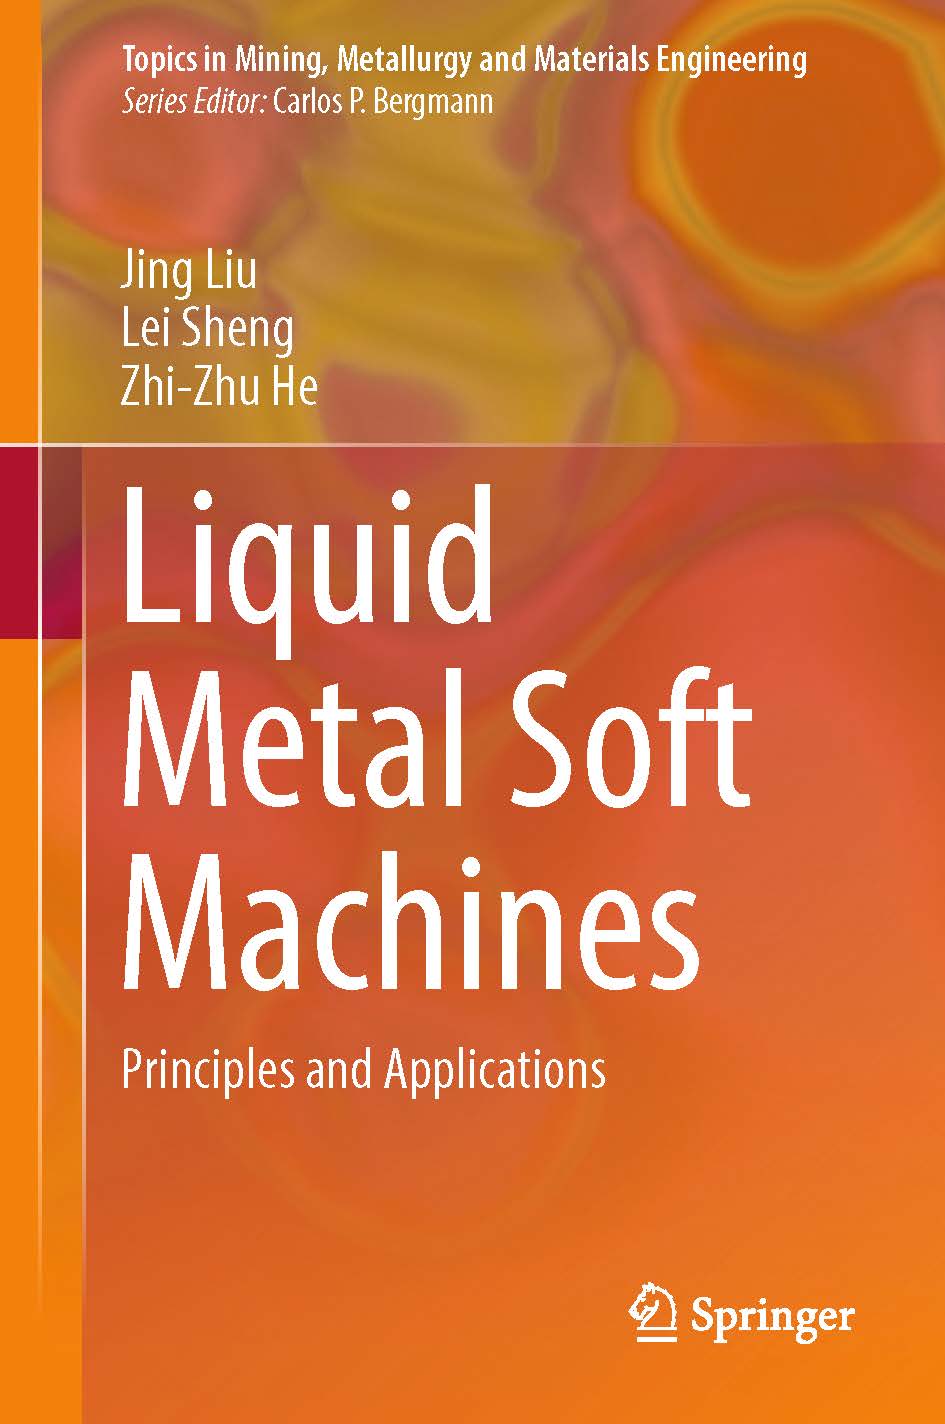 页面提取自－2019_Book_Liquid Metal Soft Machines.jpg